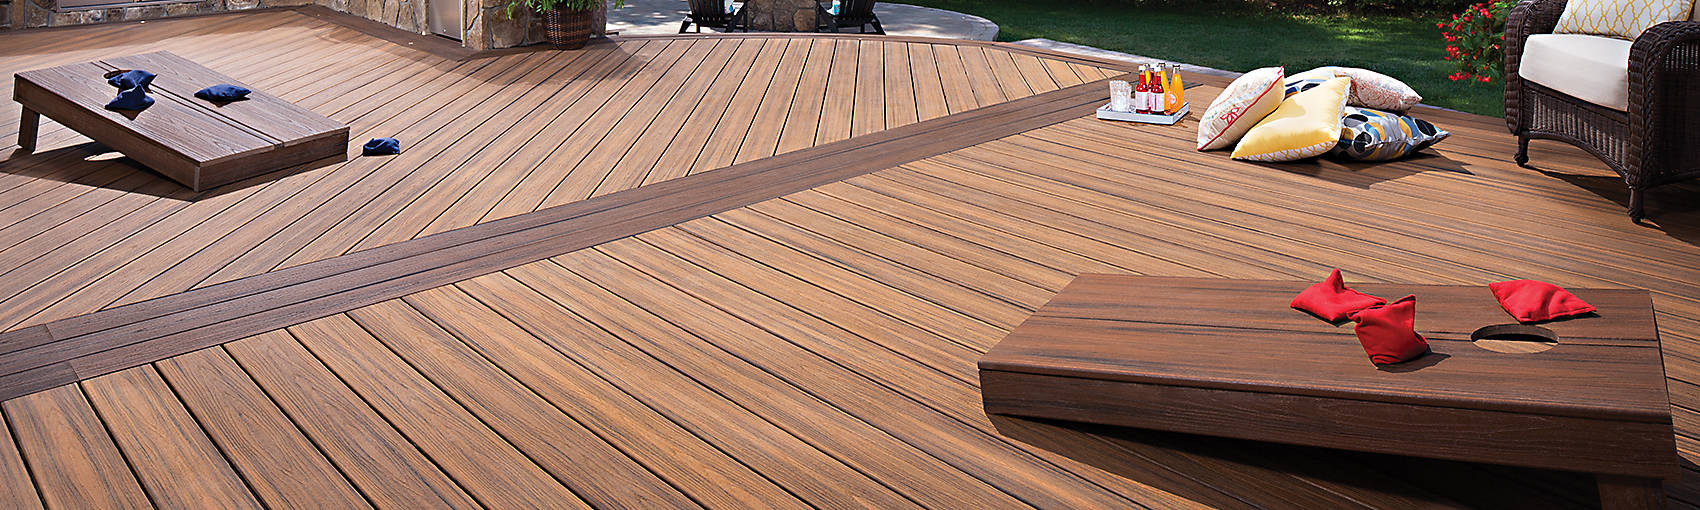 Composite Decking Wpc Wood Alternative Decking Trex regarding measurements 1700 X 510